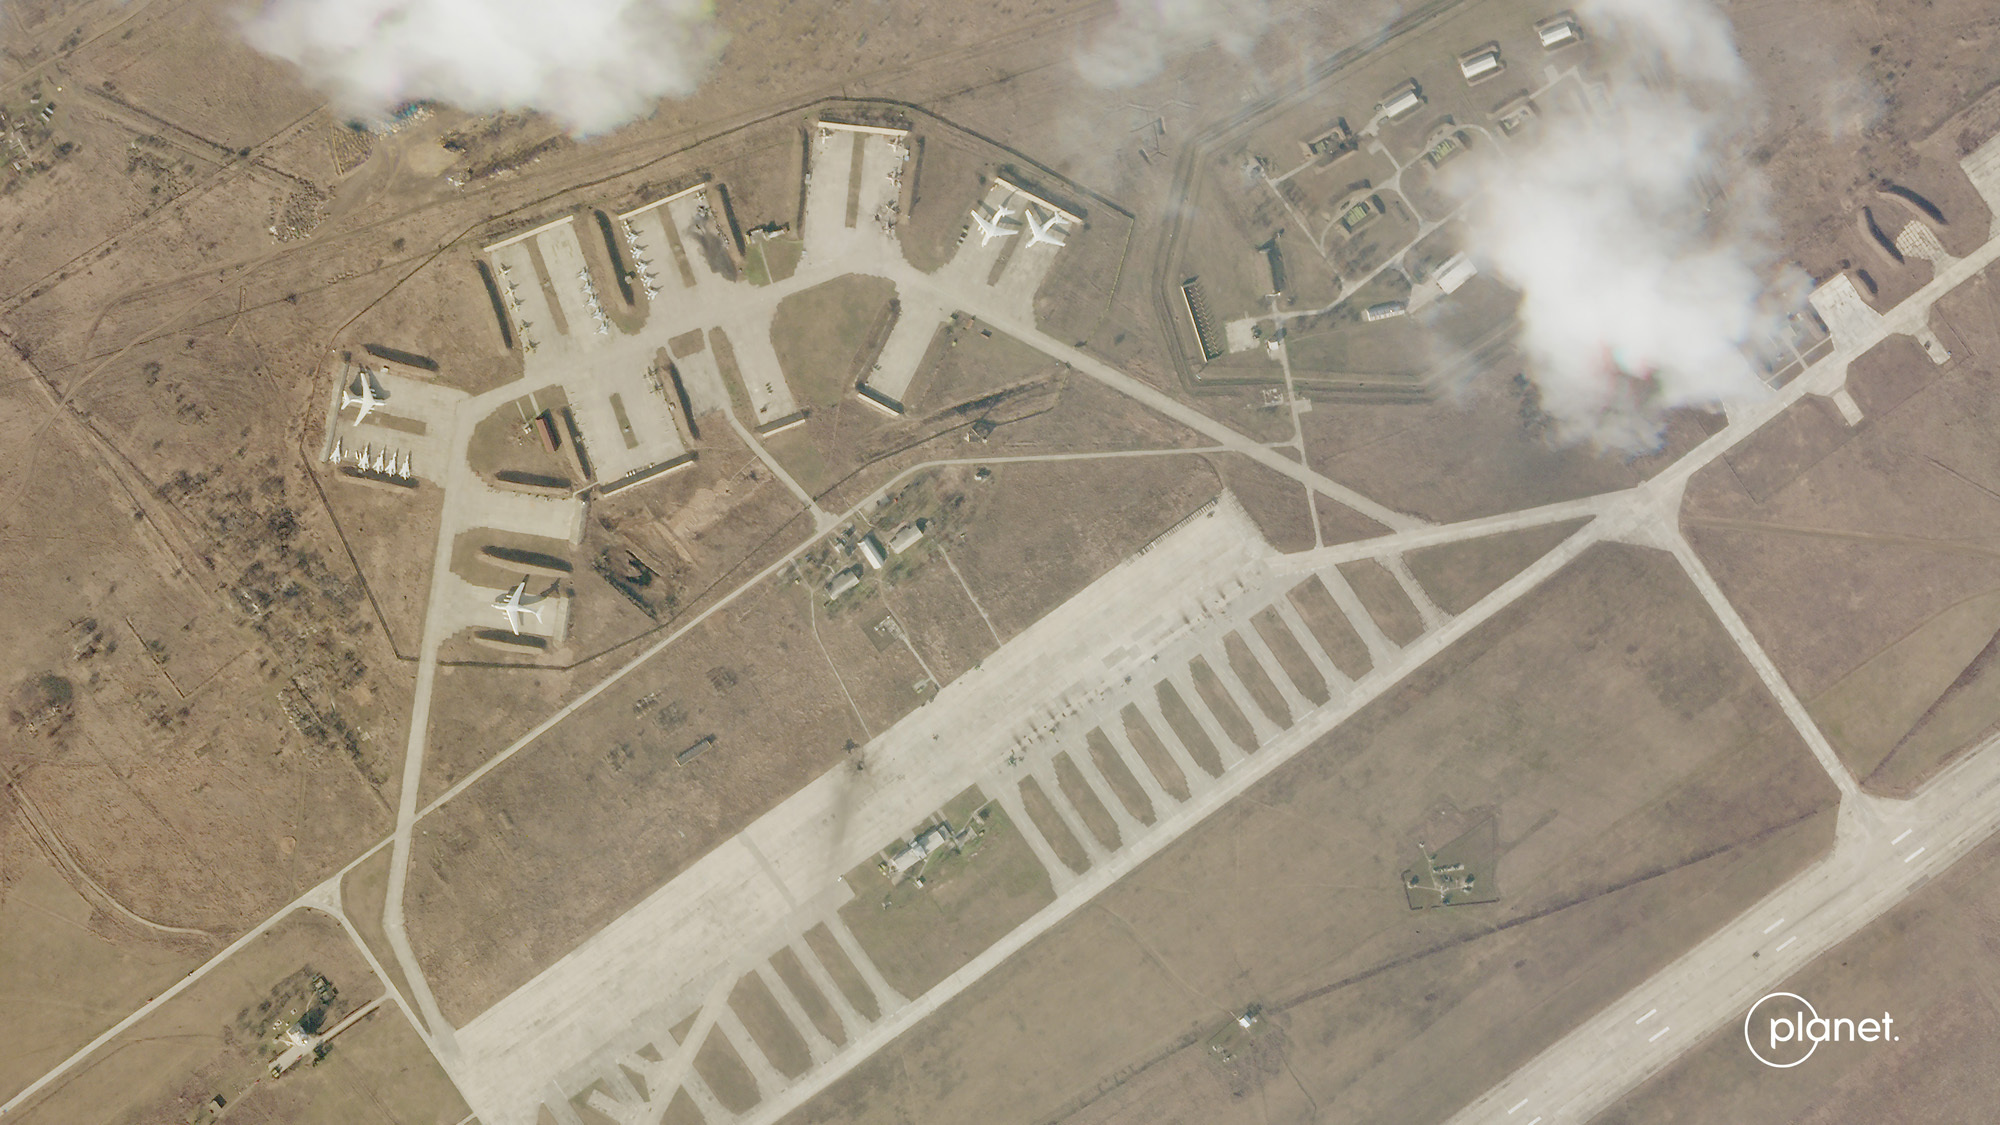 The Mikolaiv Airbase in Ukiraine on Feb. 24, 2022.